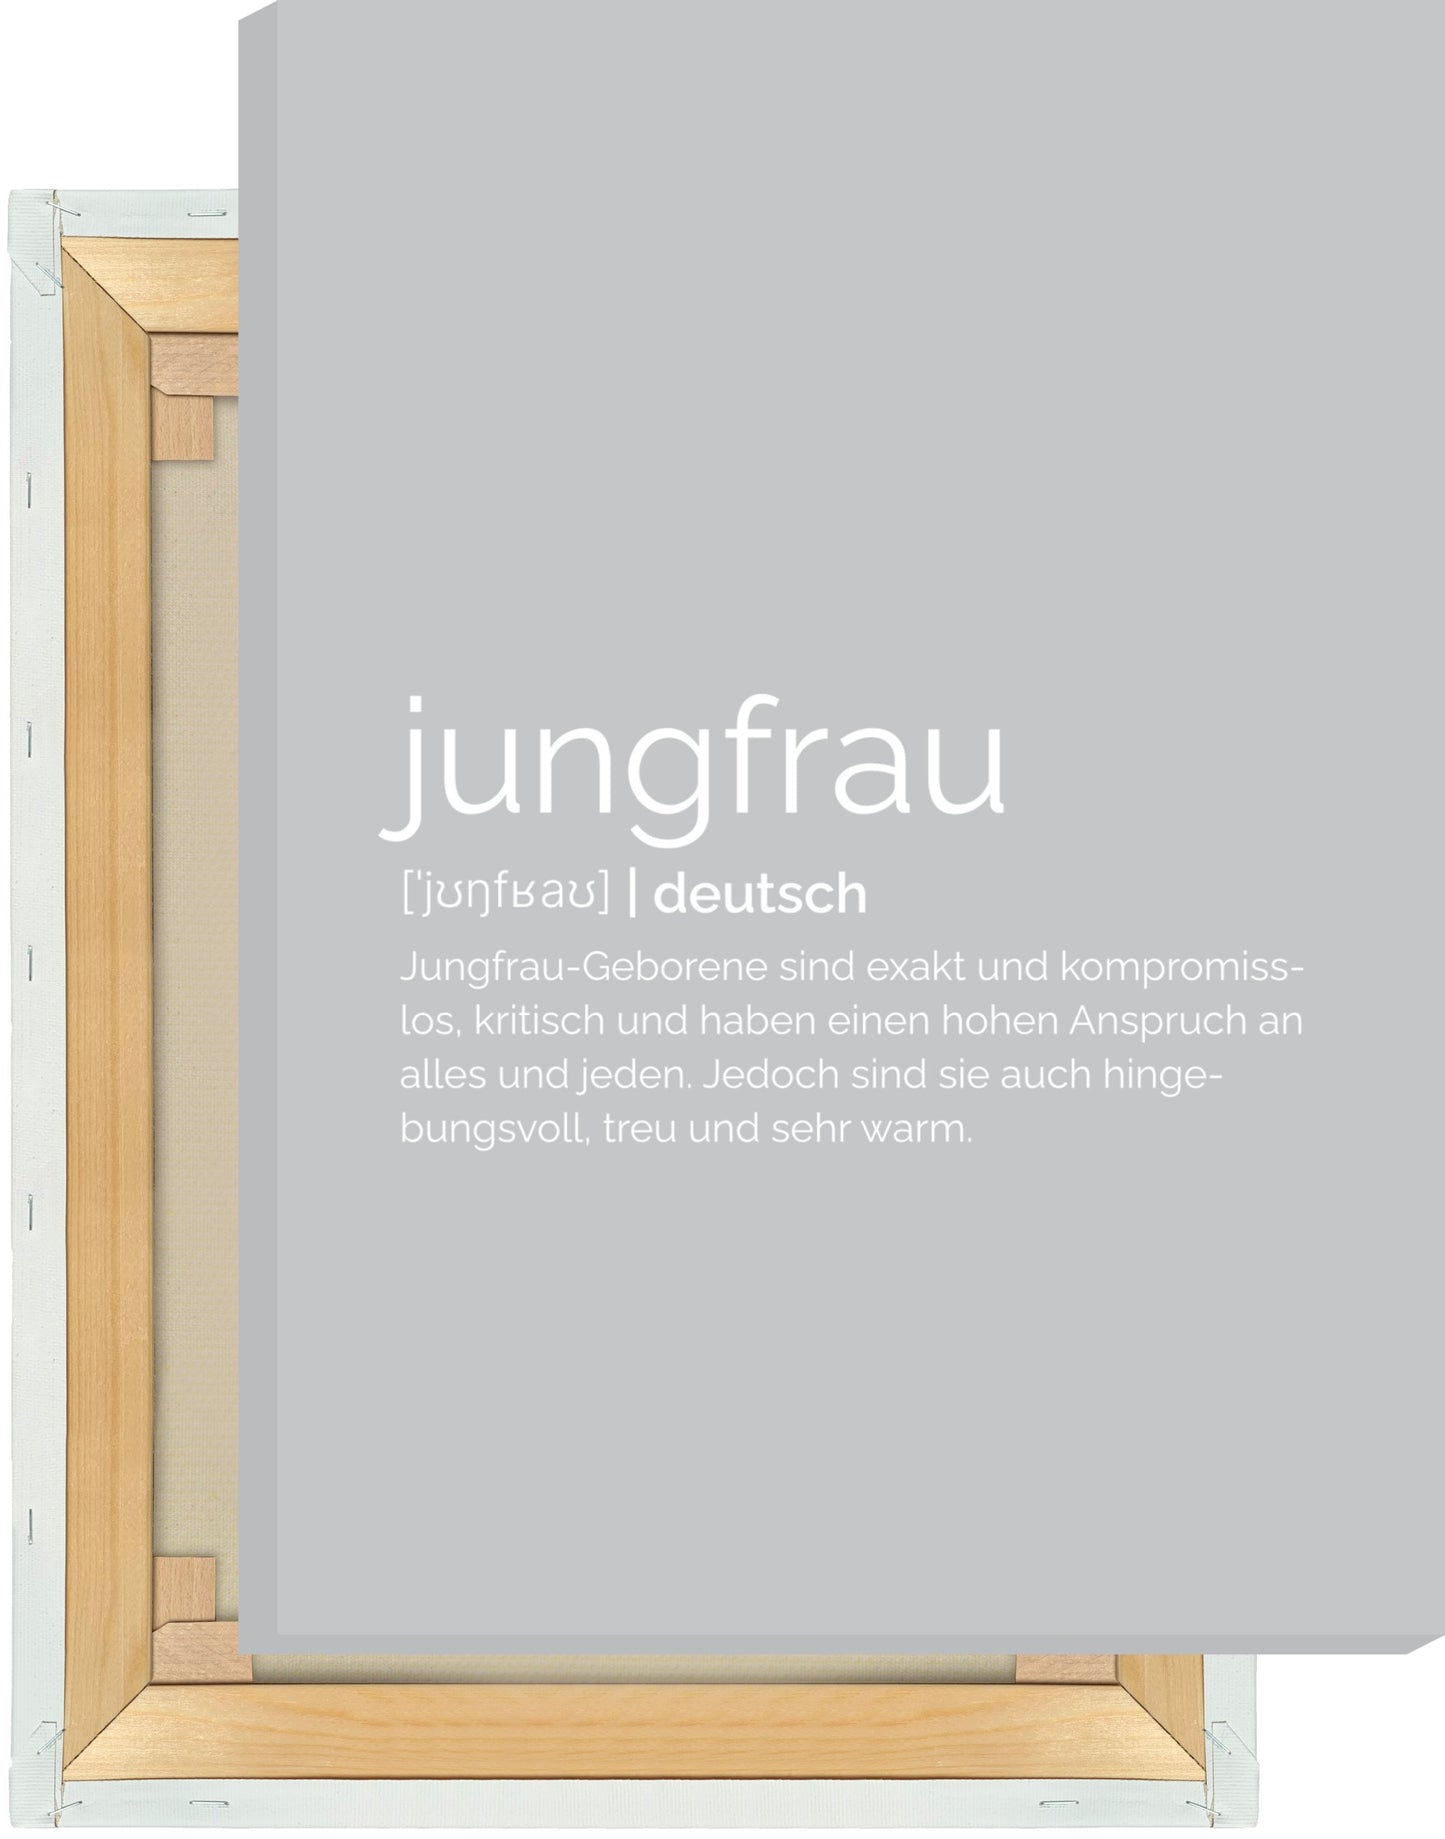 Leinwand Sternzeichen Jungfrau - Definition